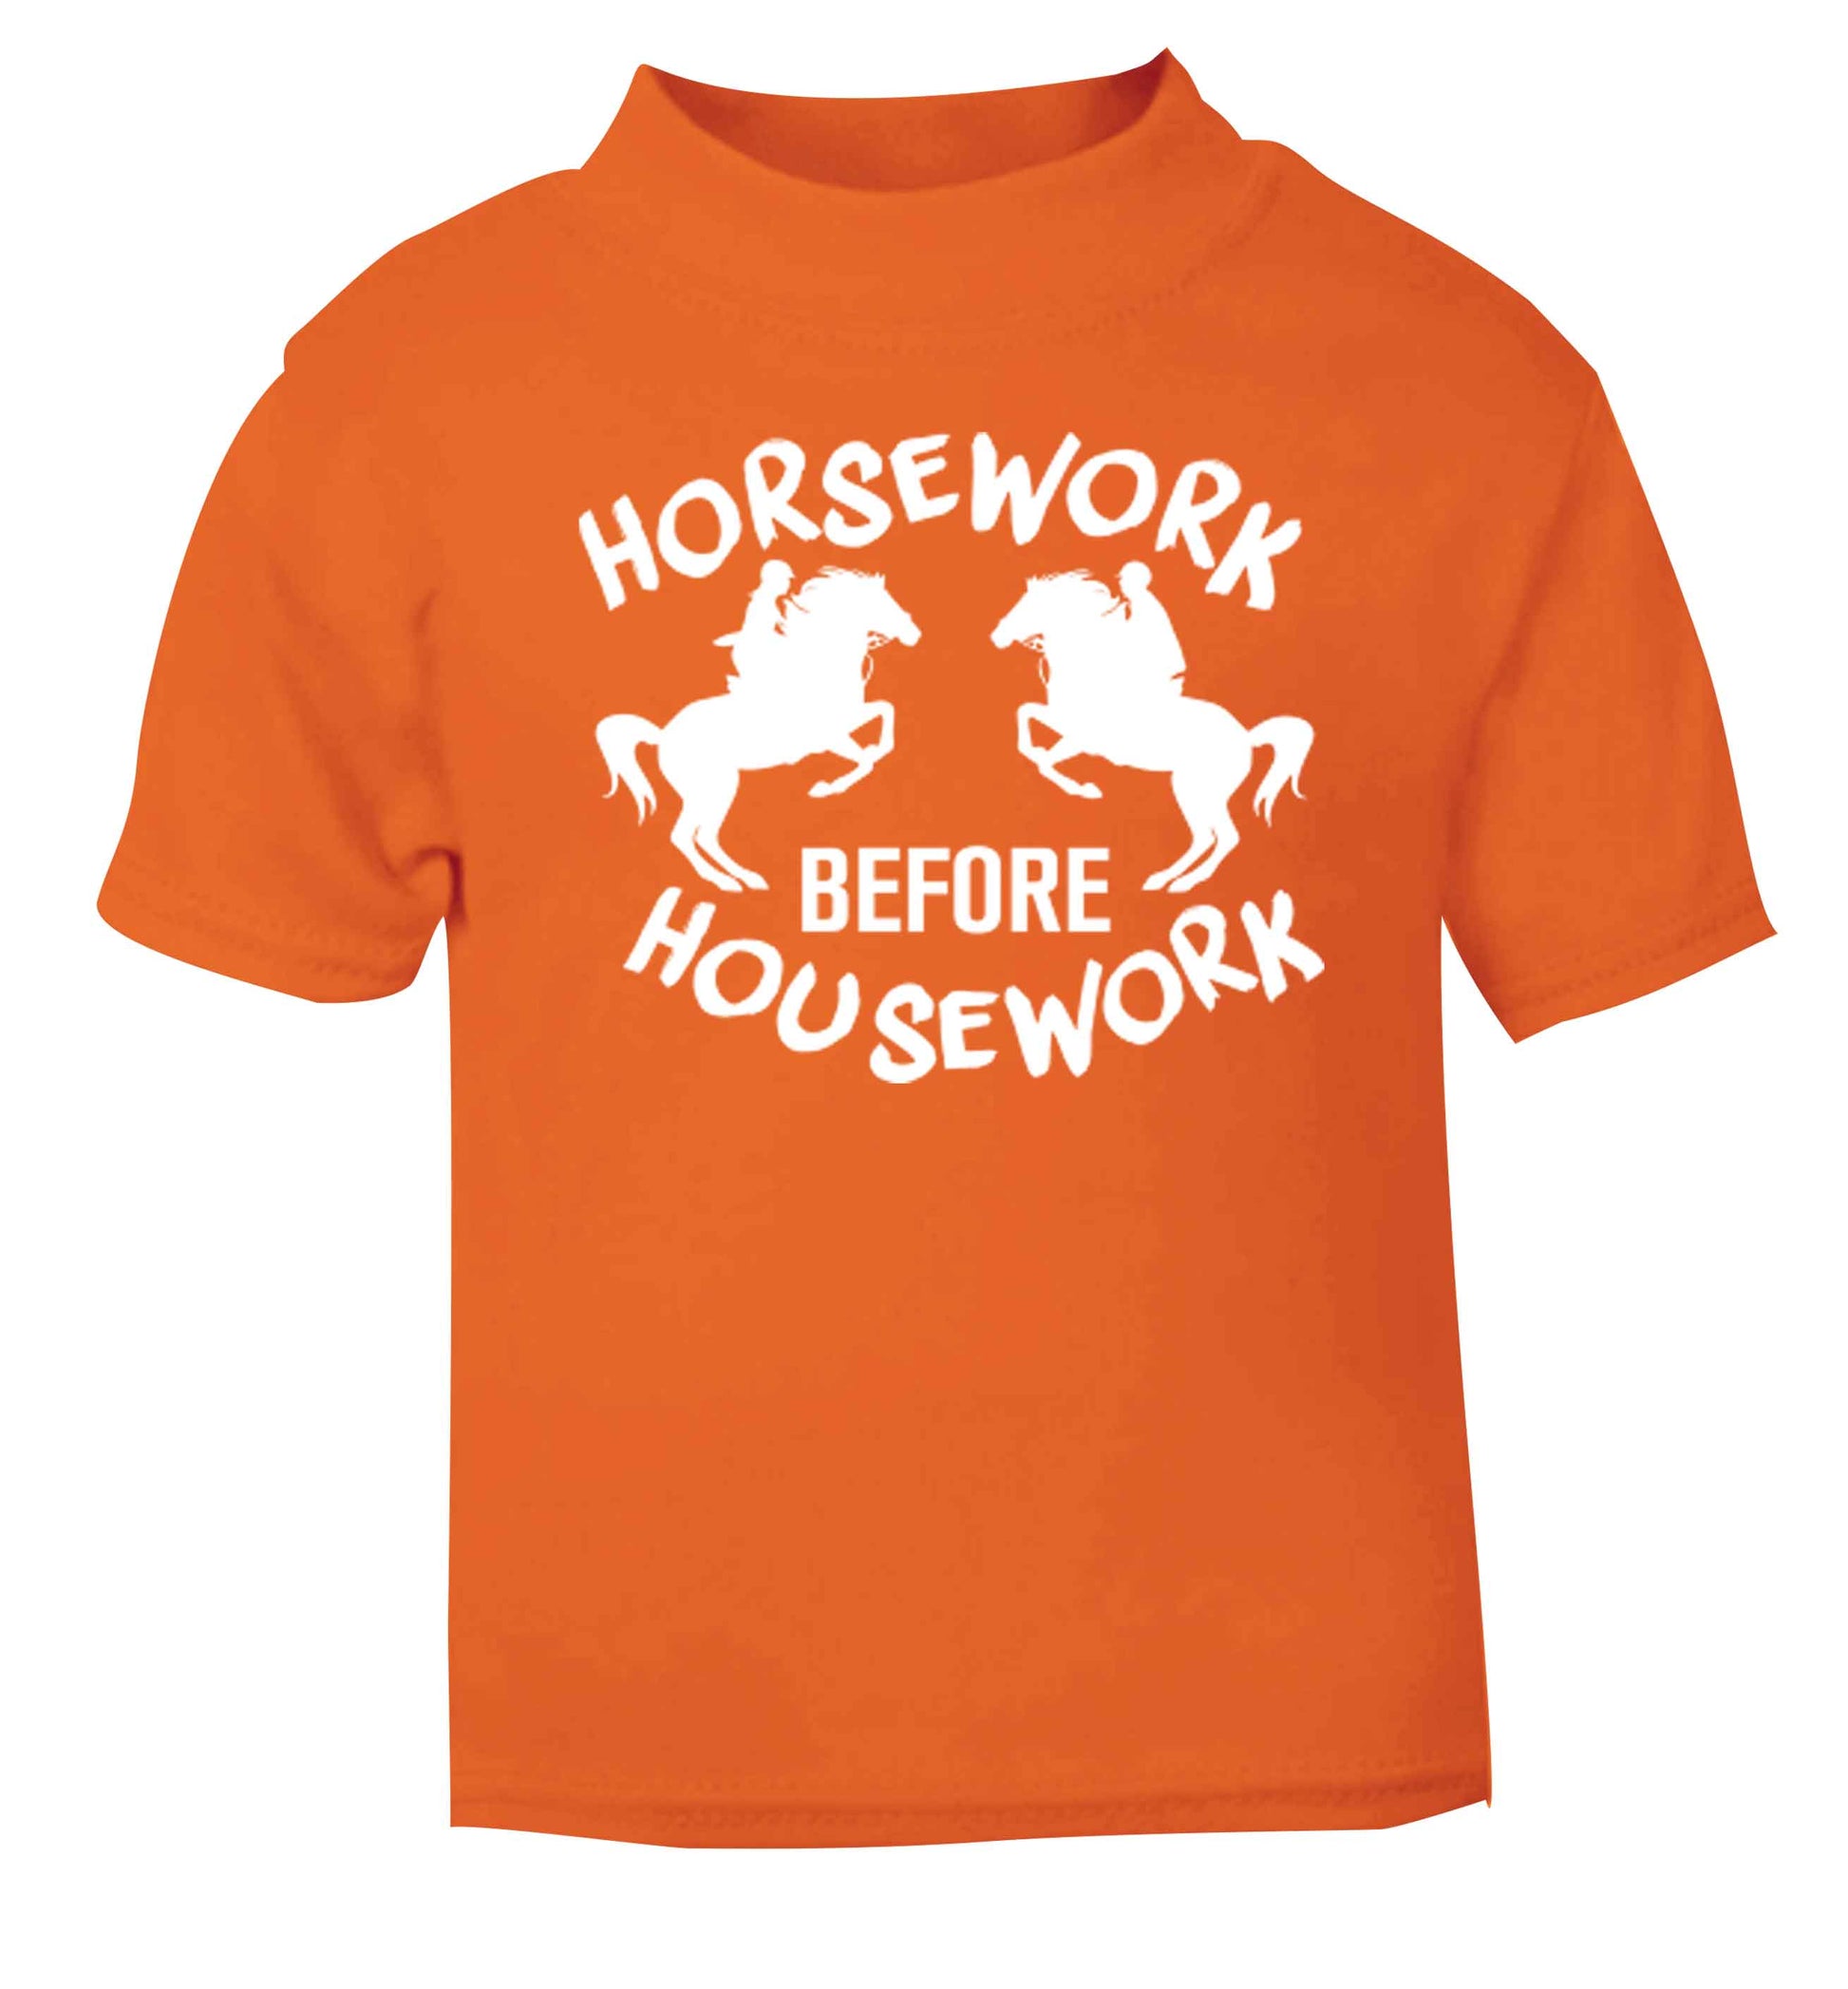 Horsework before housework orange baby toddler Tshirt 2 Years